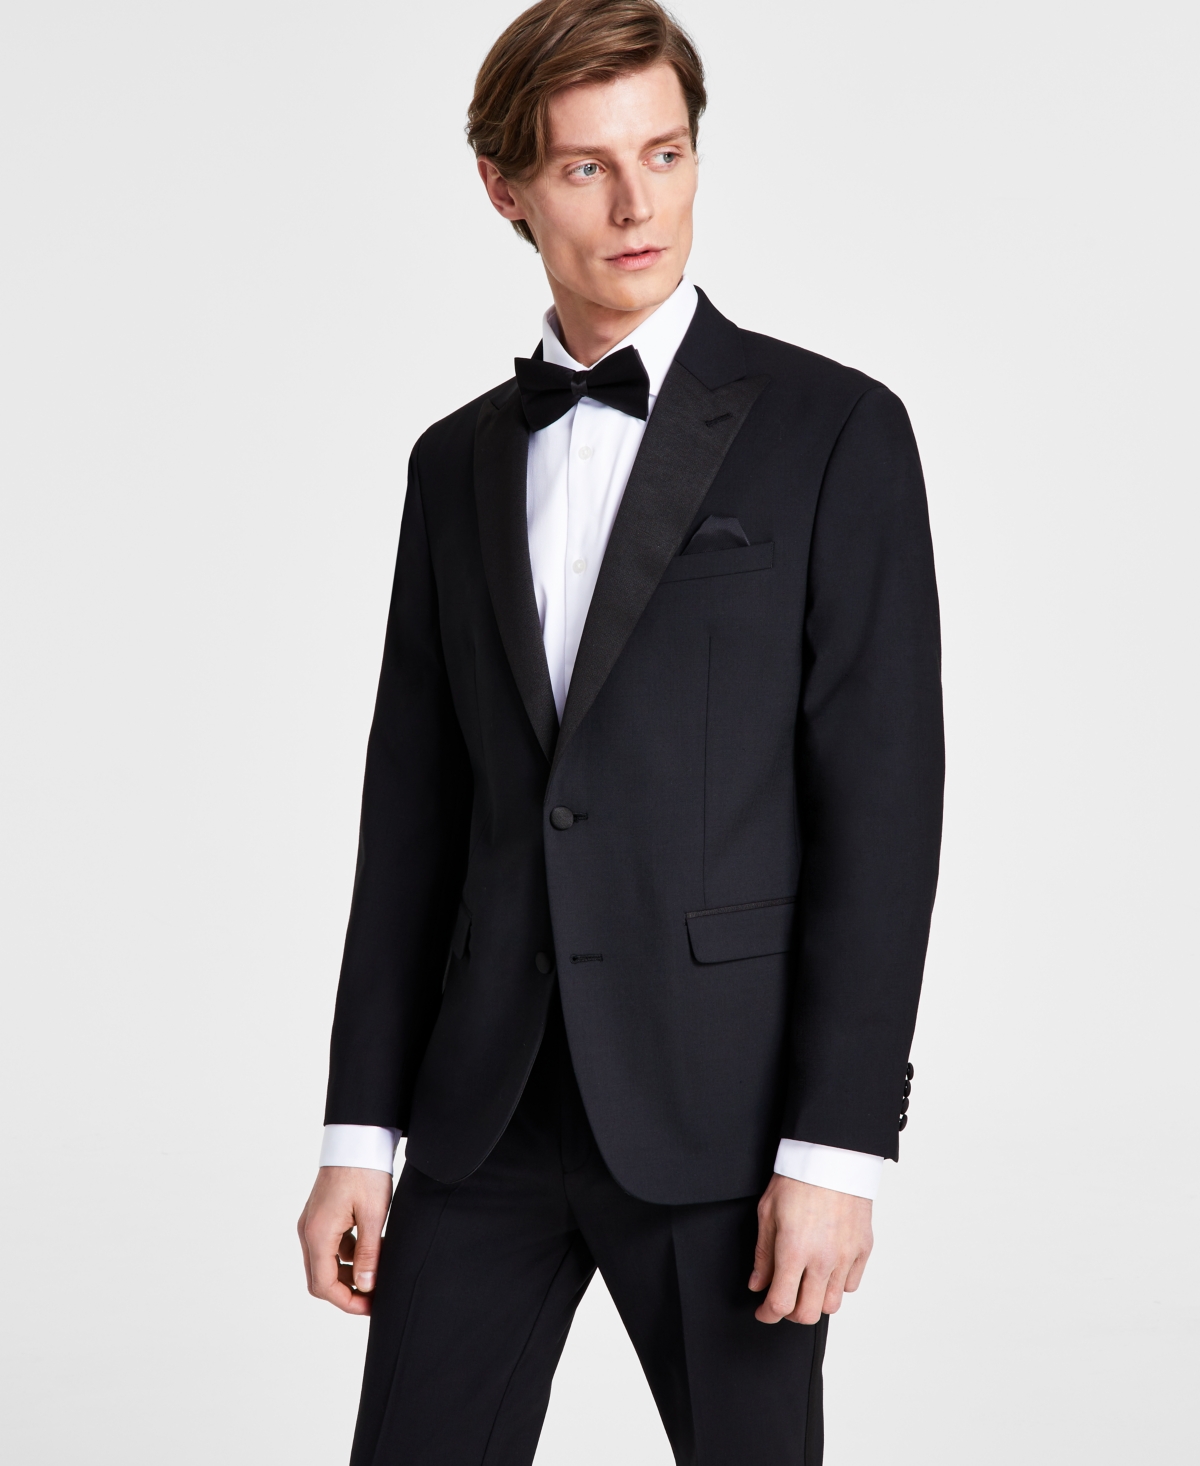 Men's Slim-Fit Faille-Trim Tuxedo Jacket, Created for Macy's - Black